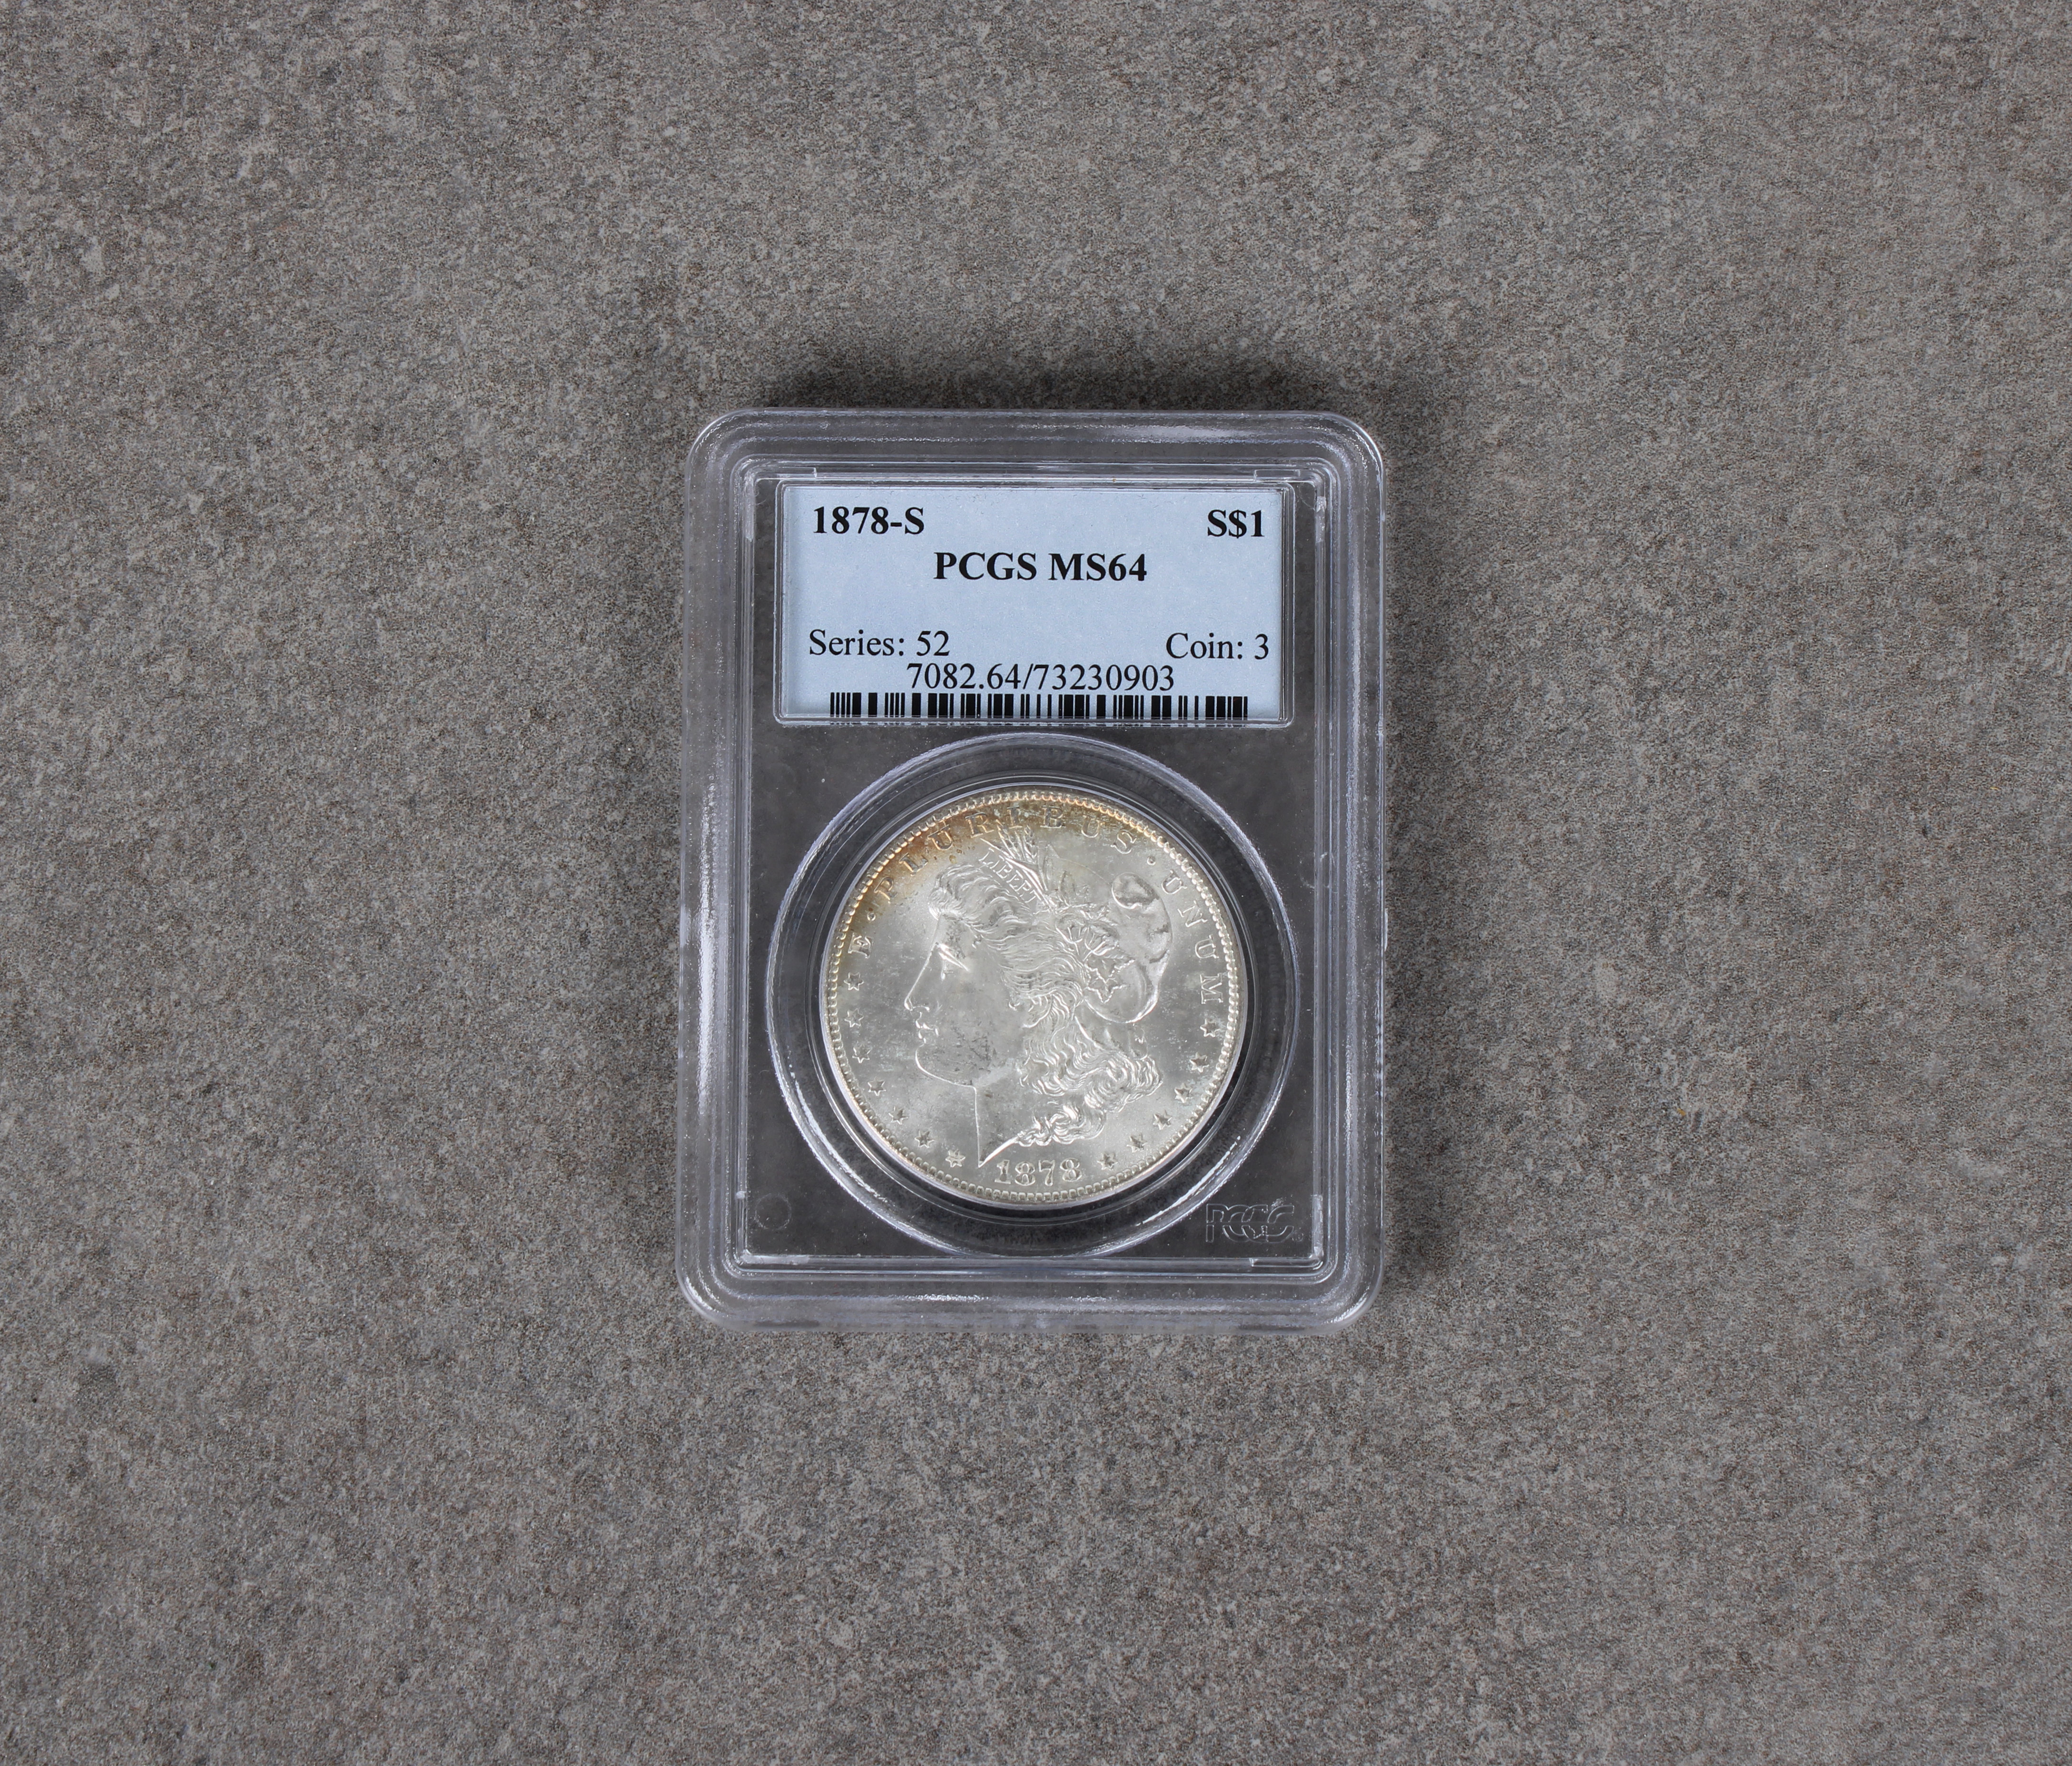 An 1878-S Morgan Dollar series: 52 coin: 3 - PCGS graded